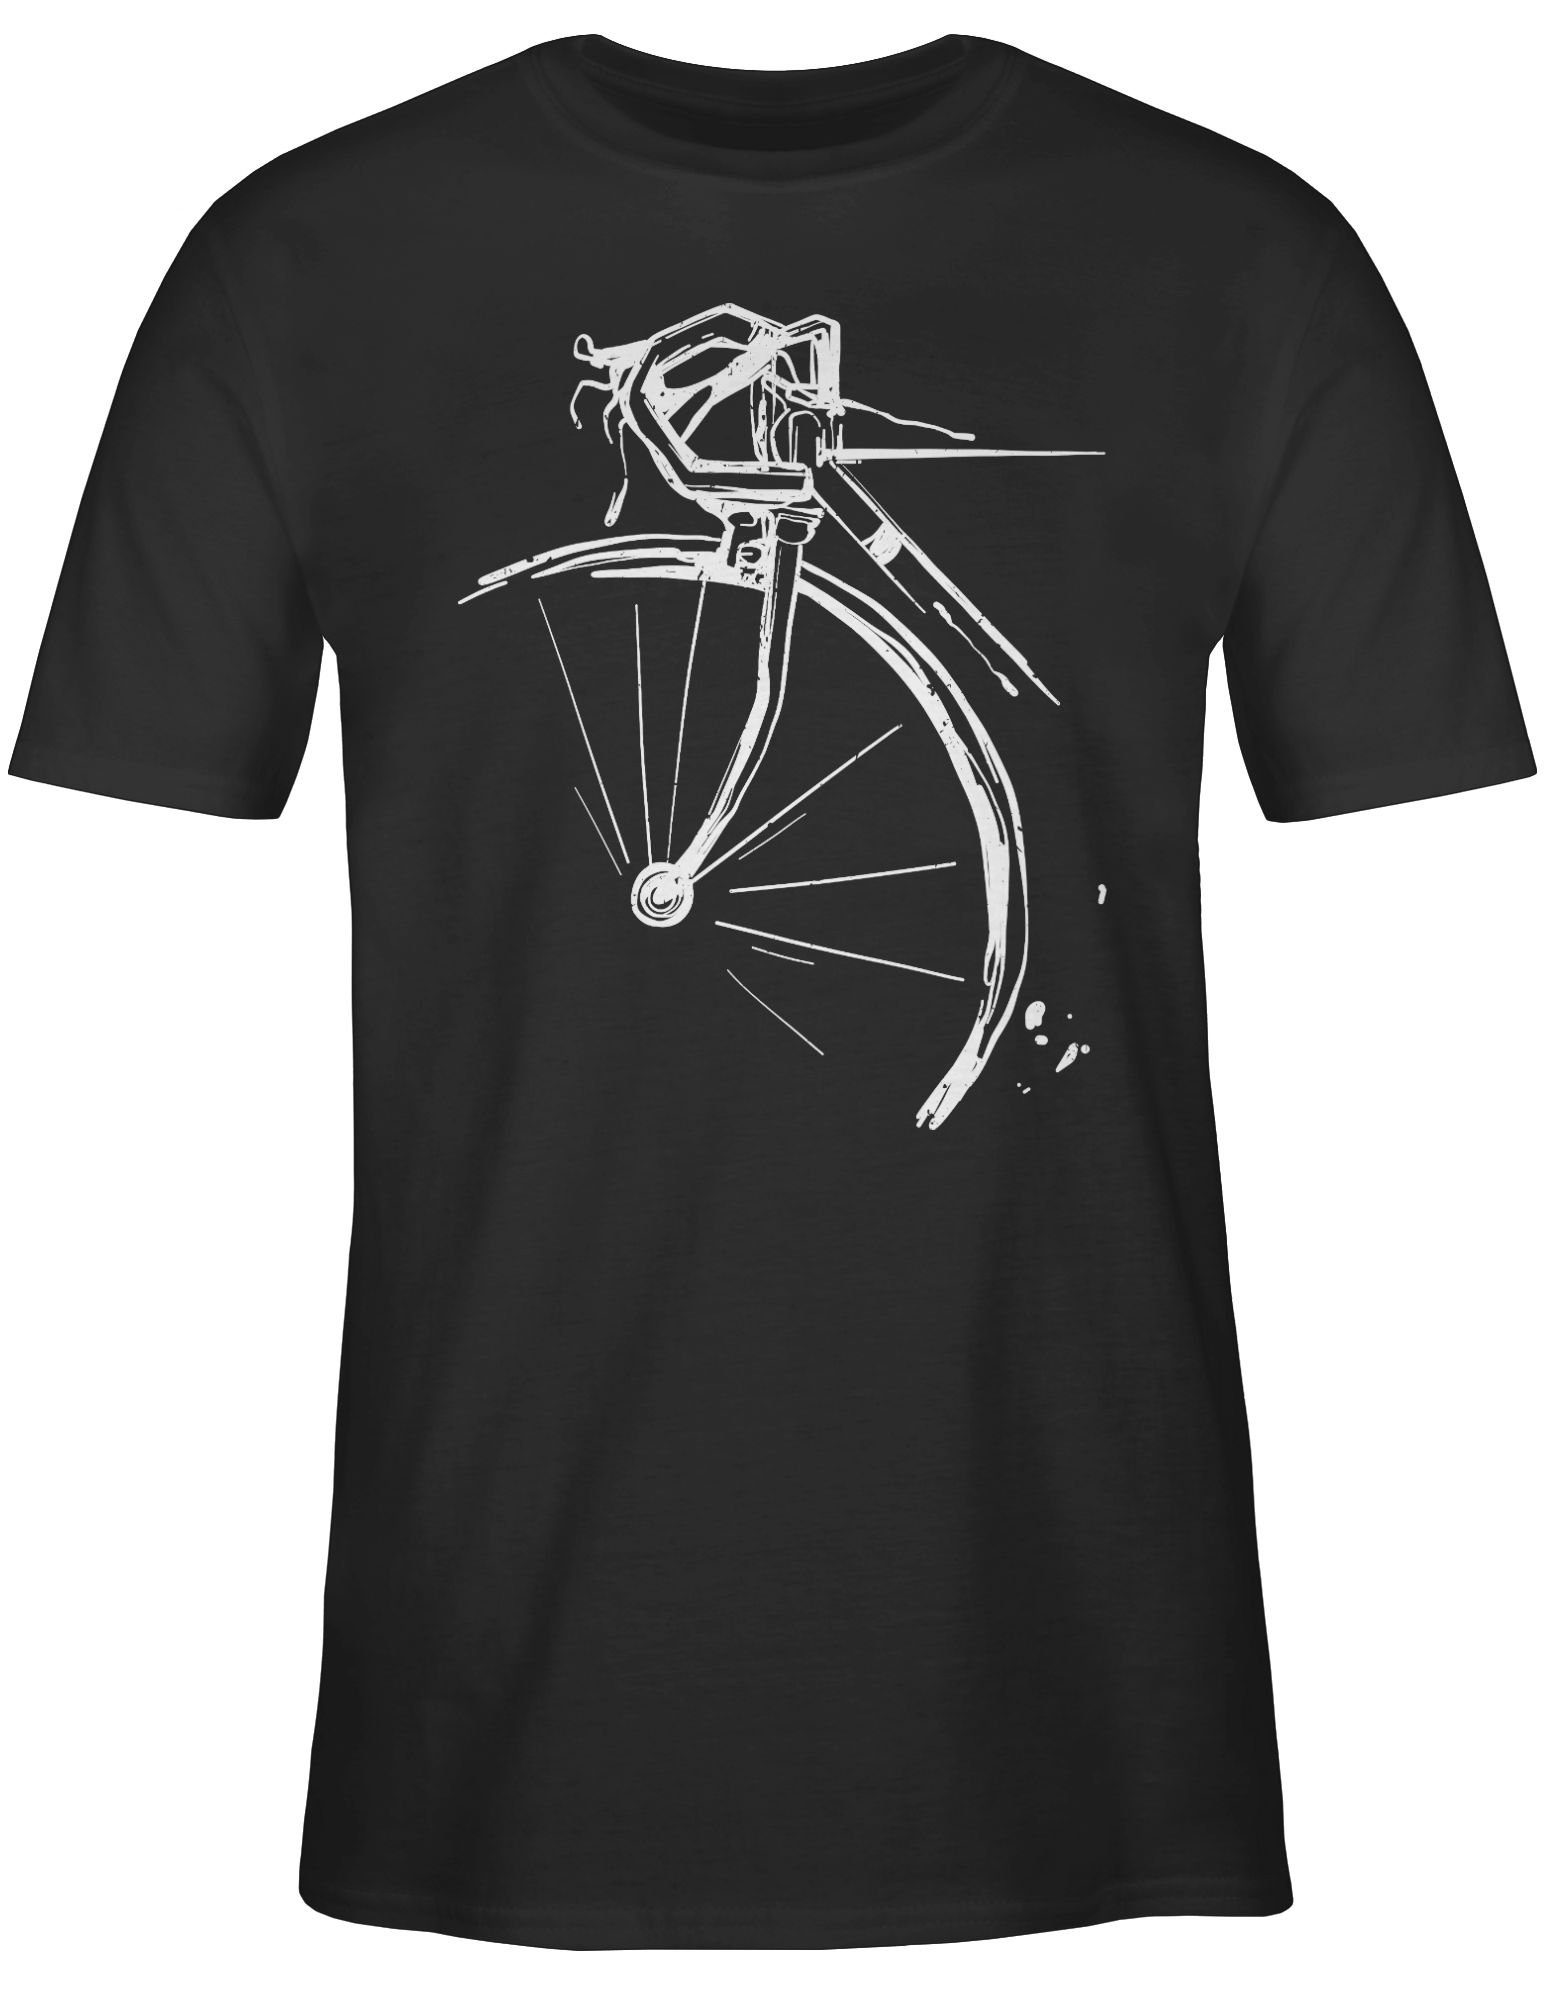 Bekleidung Fahrrad Schwarz Shirtracer Fahrrad Radsport T-Shirt 02 Rennrad